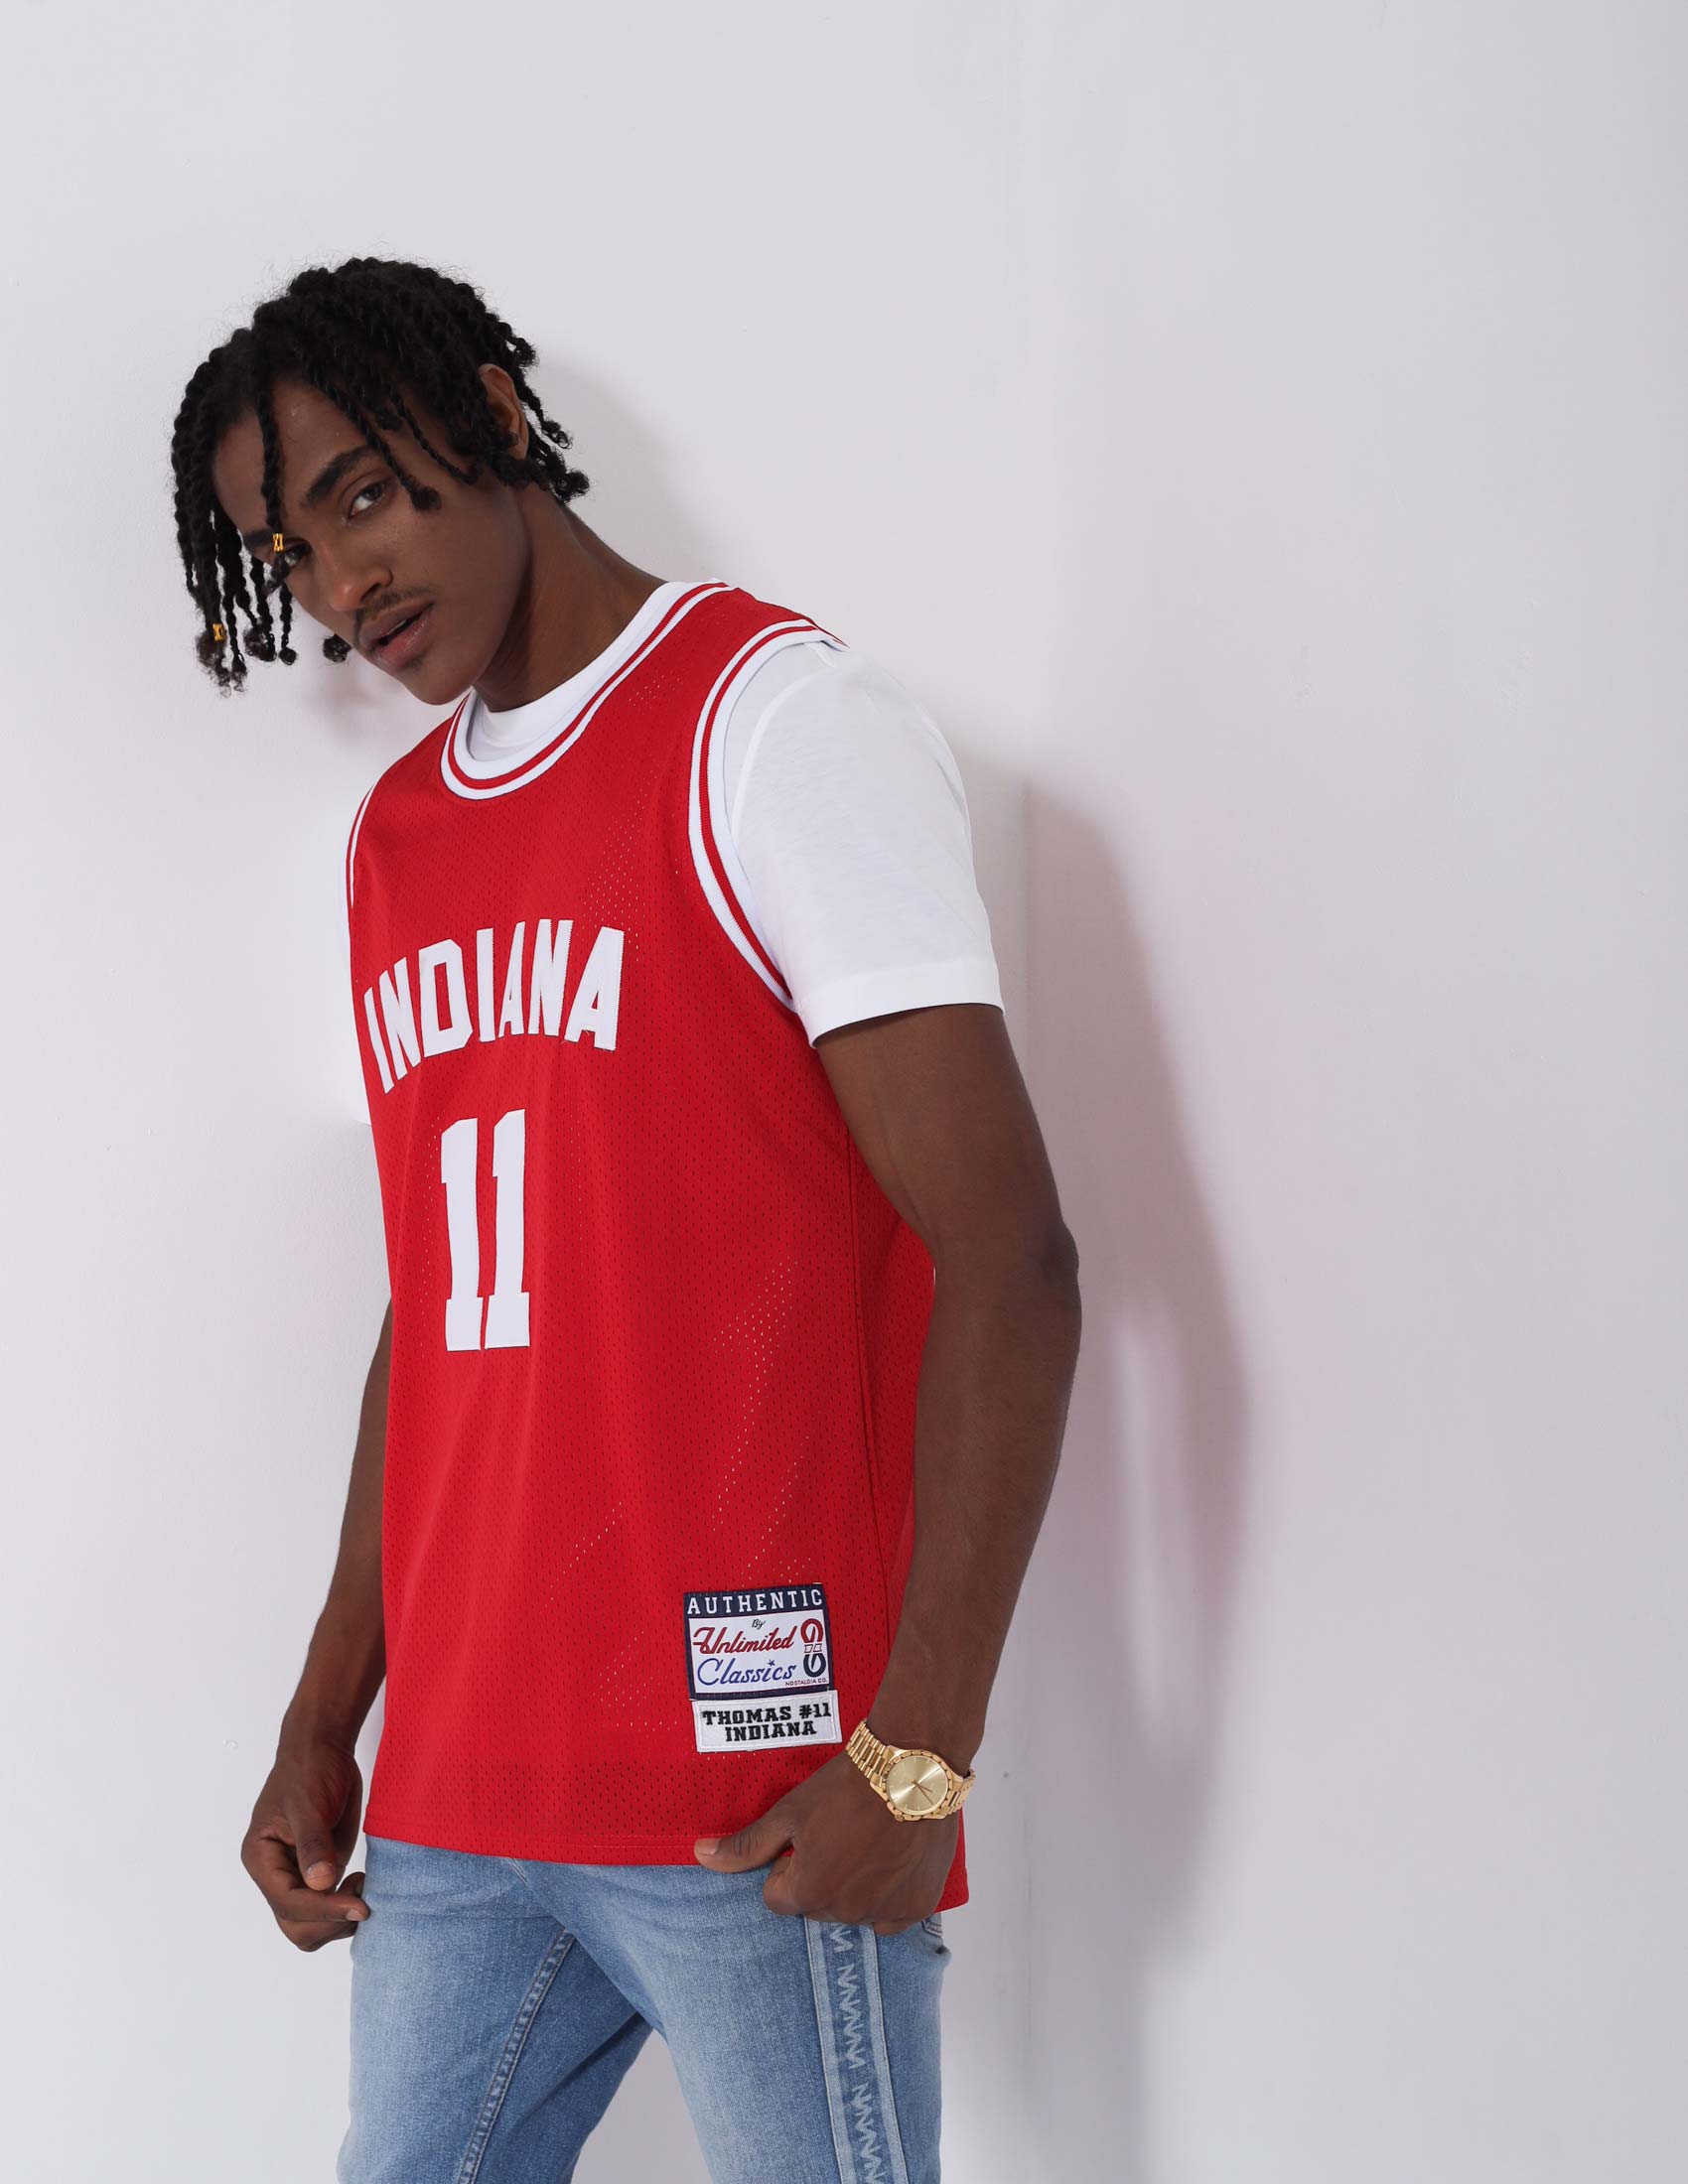 NBA Isiah Thomas #11 Detroit Pistons Adidas Jersey Size 44